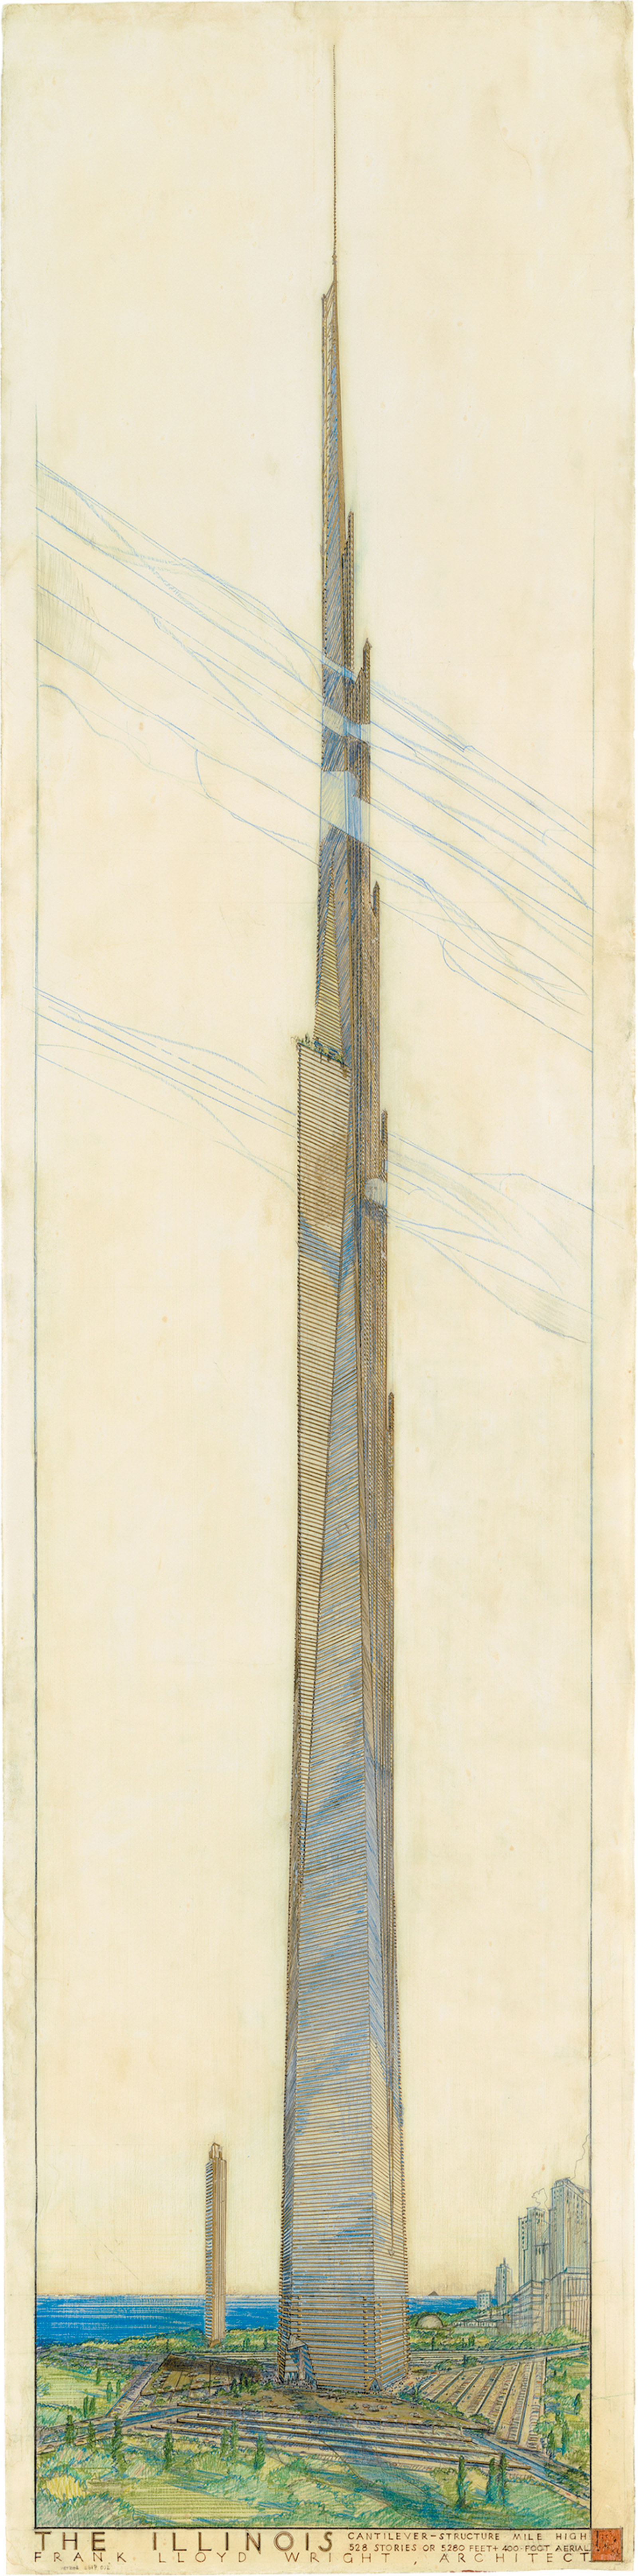 Frank Lloyd Wright 12 Architect Scale –